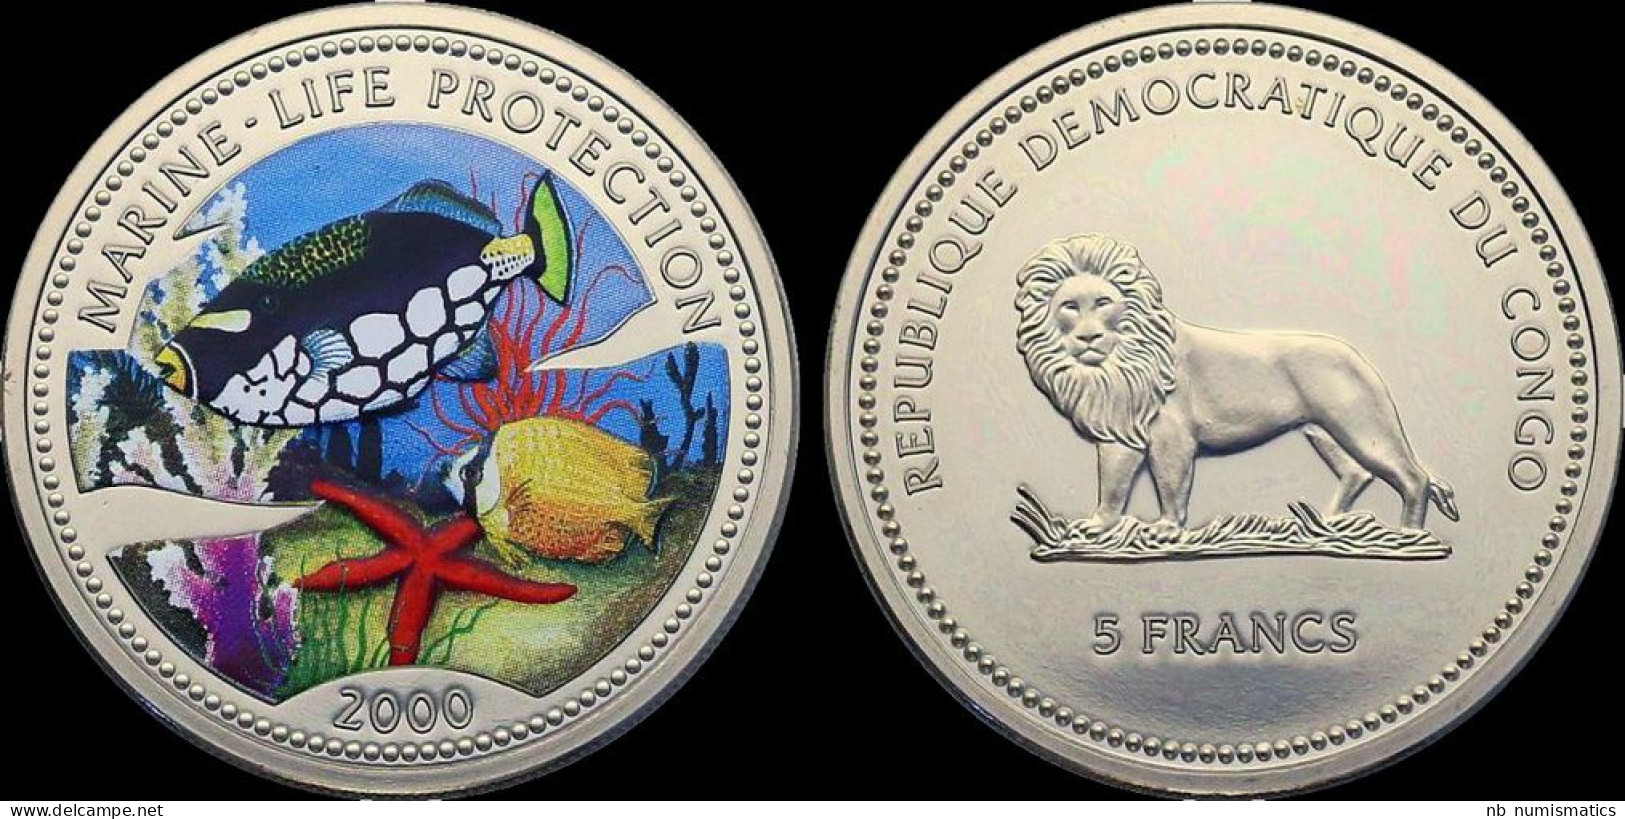 Republique Democratique Du Congo 5 Francs 2000 Marine-life Protection Proof In Plastic Capsule - Congo (Democratische Republiek 1998)